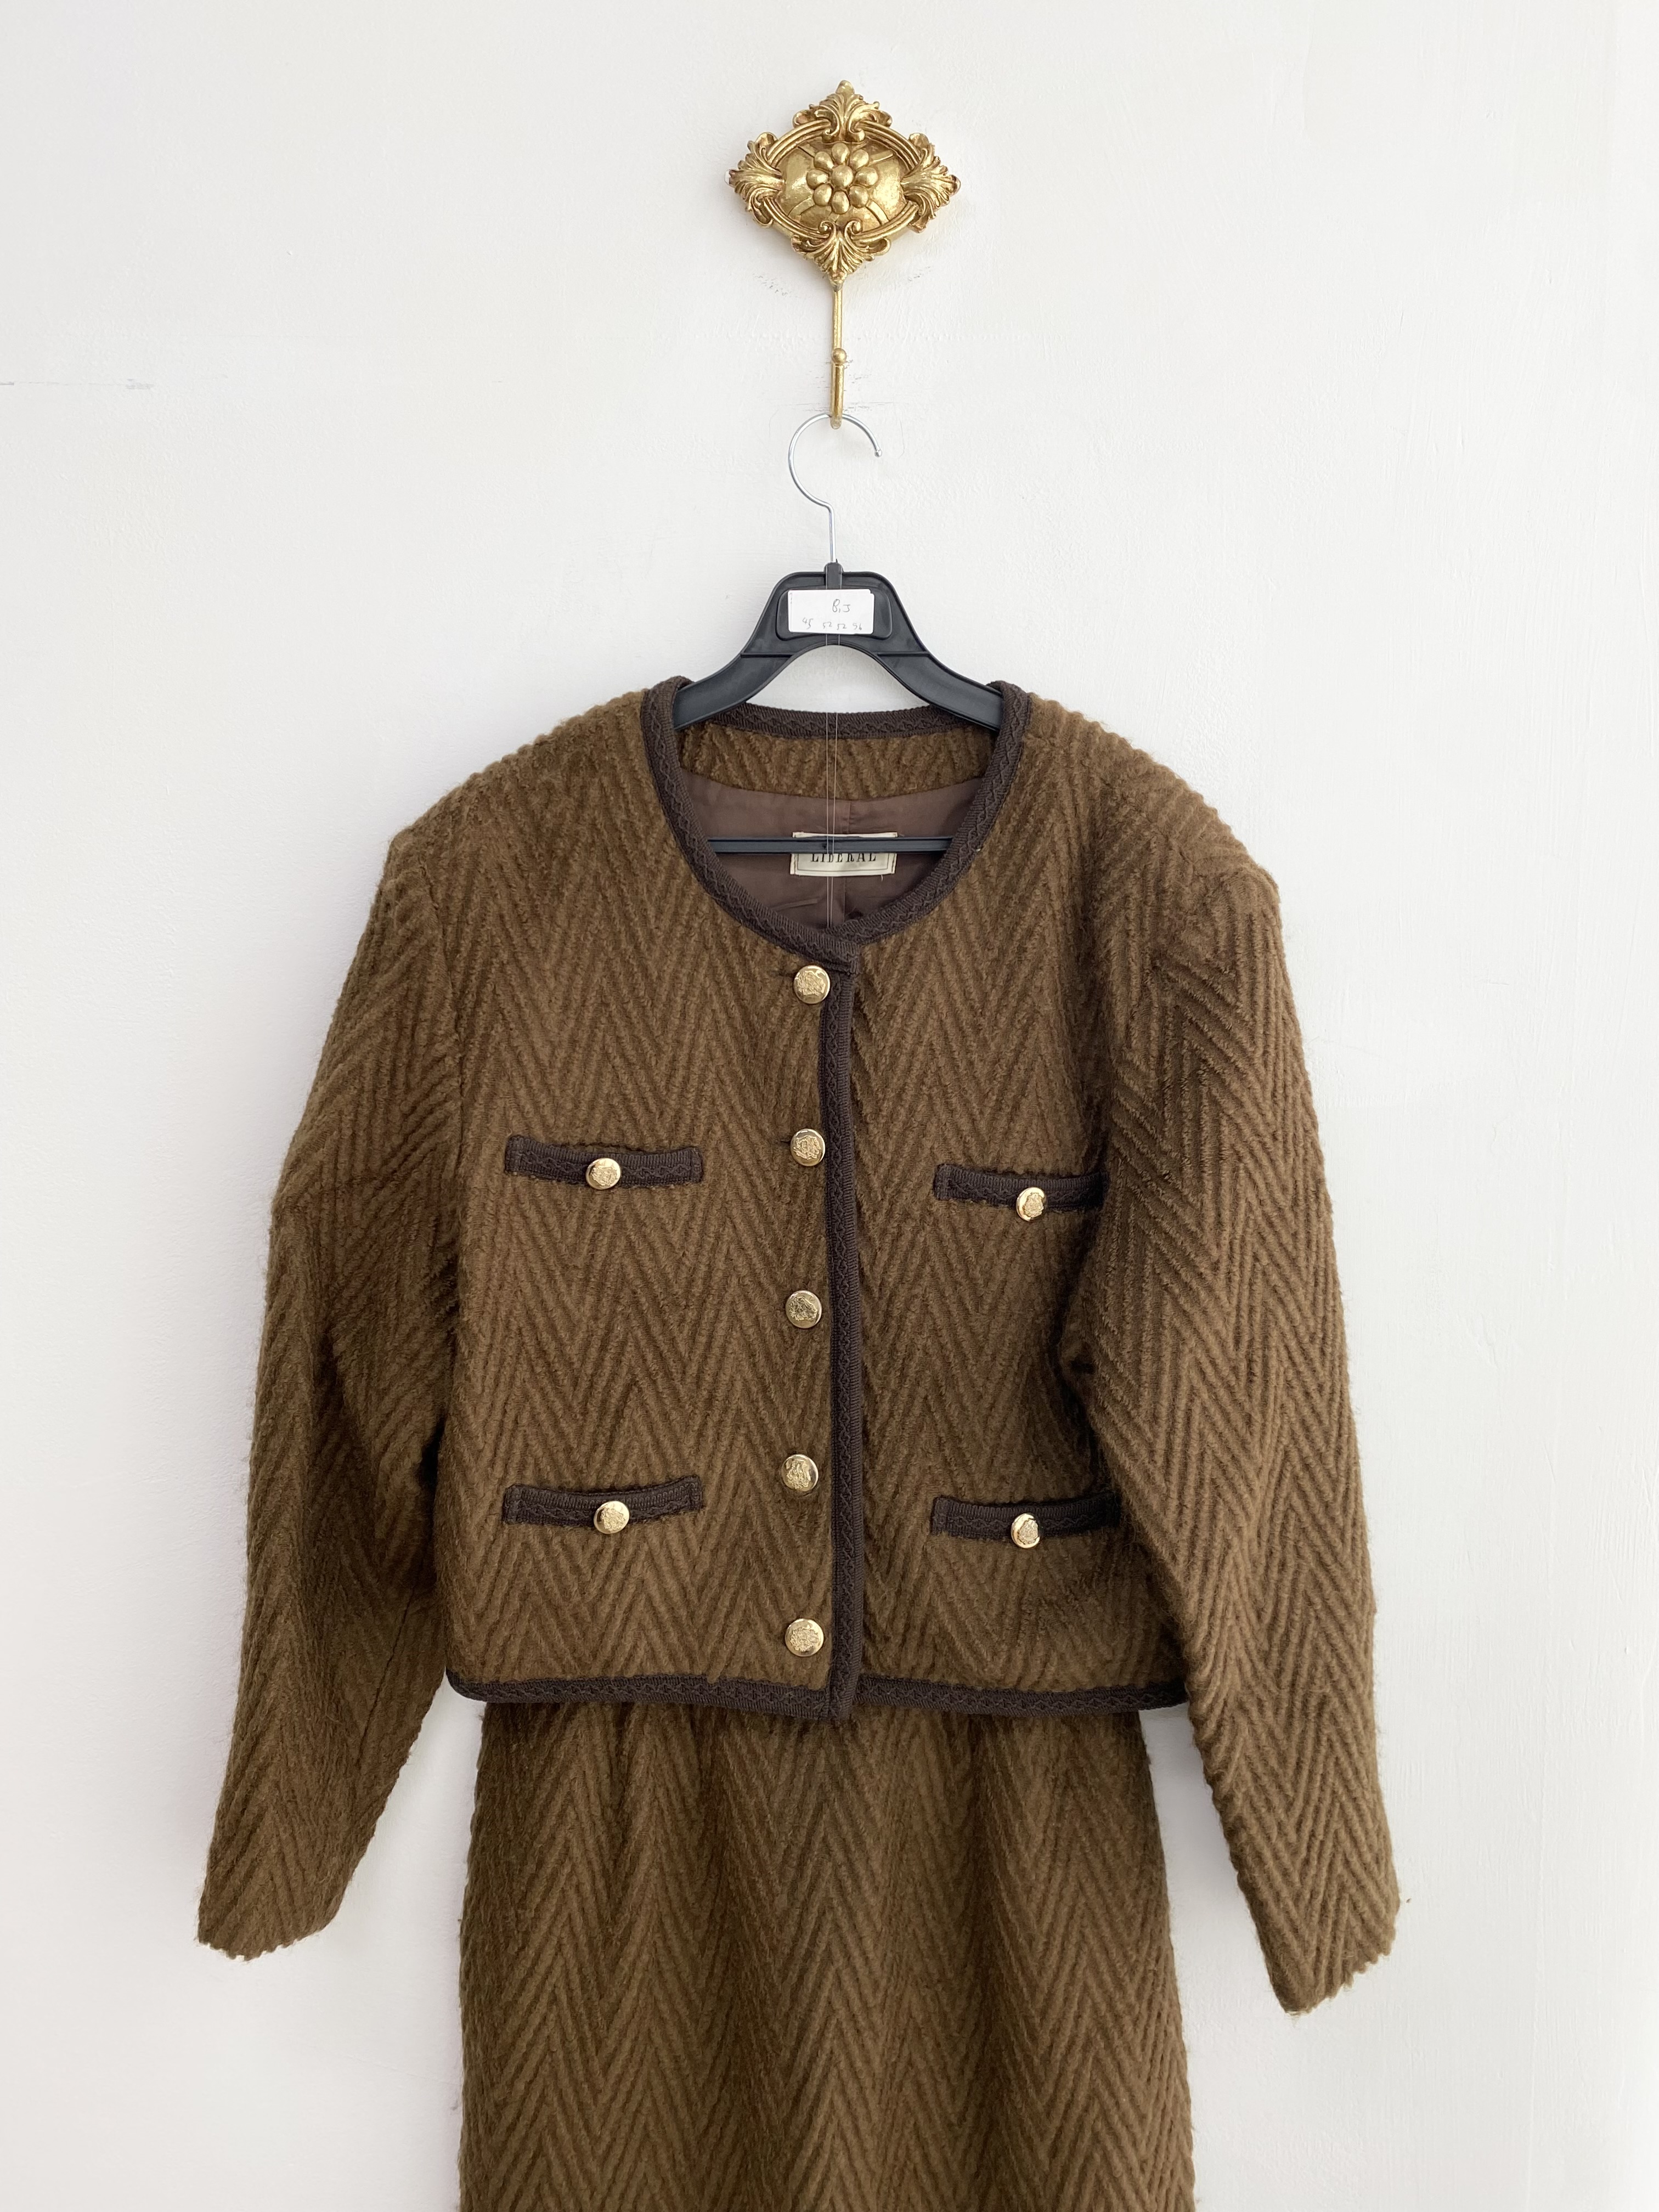 Khaki brown herringbone pattern wool jacket skirt setup